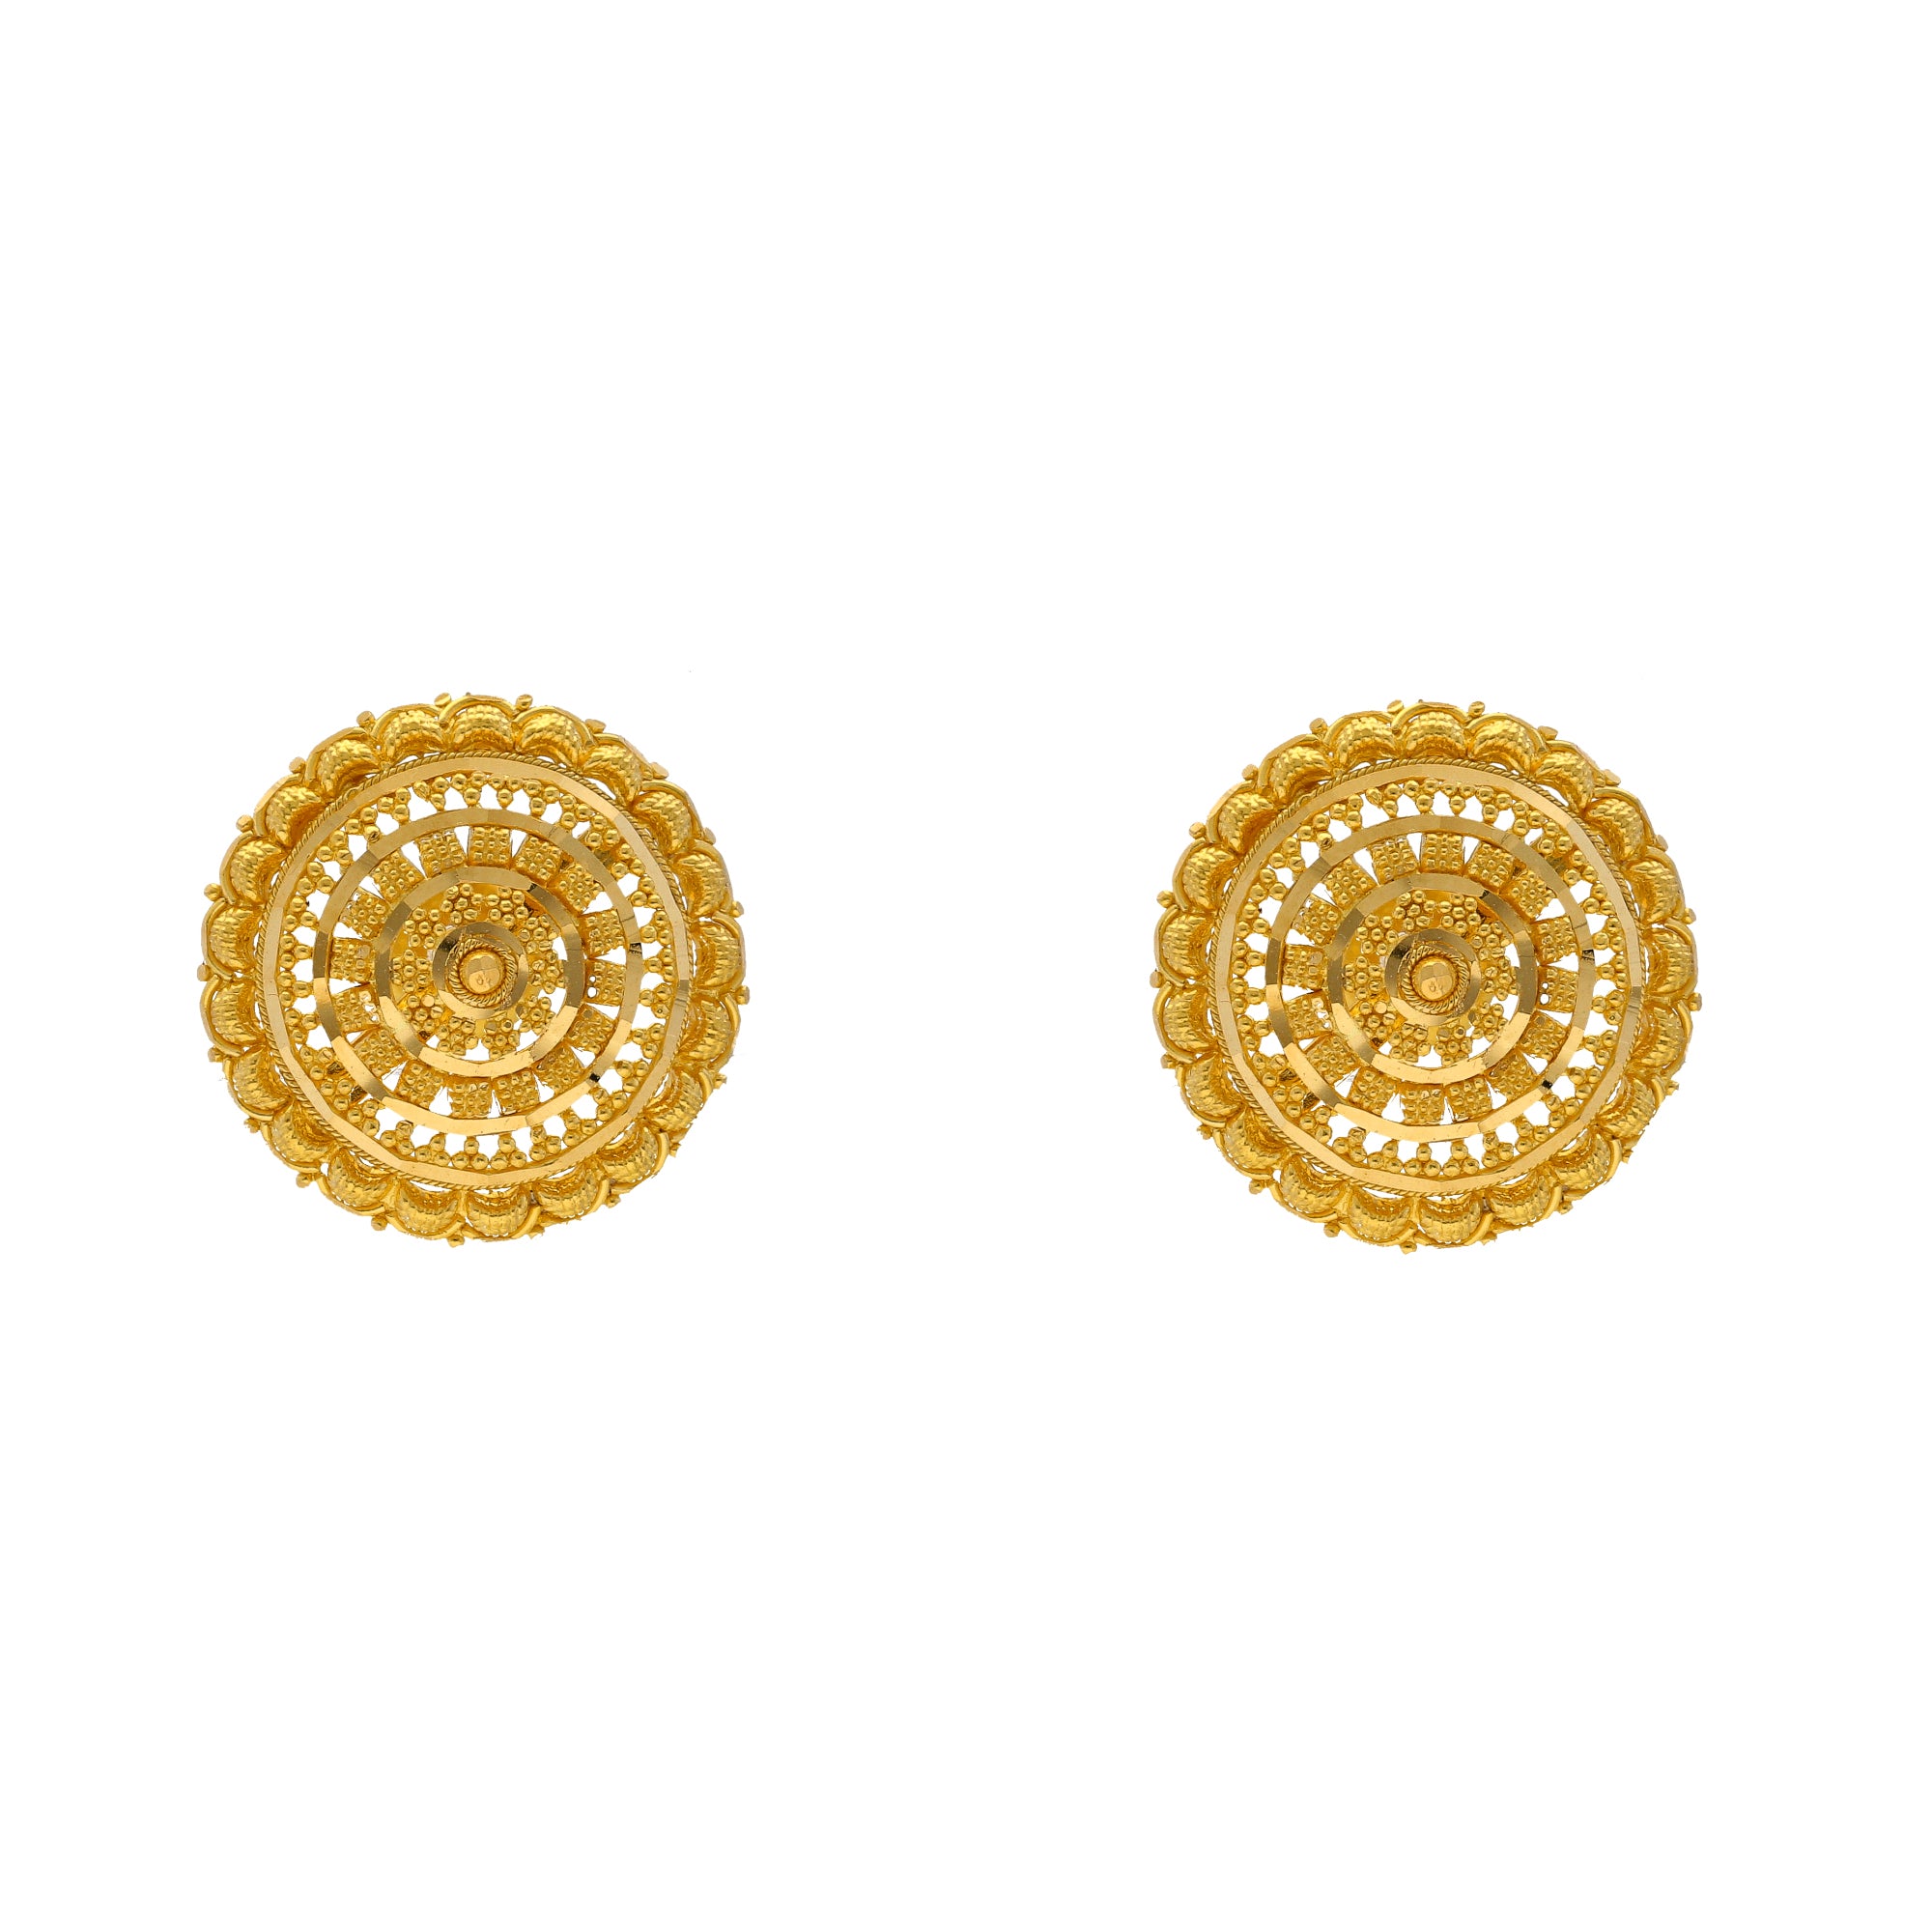 Antique Gold Kundan Stud Earrings /one Gram Gold Studs Gold Earrings/delicate  Studs/stud Earrings/ Indian Earrings/kundan Earrings - Etsy | Indian  earrings, Etsy earrings, Statement earrings studs